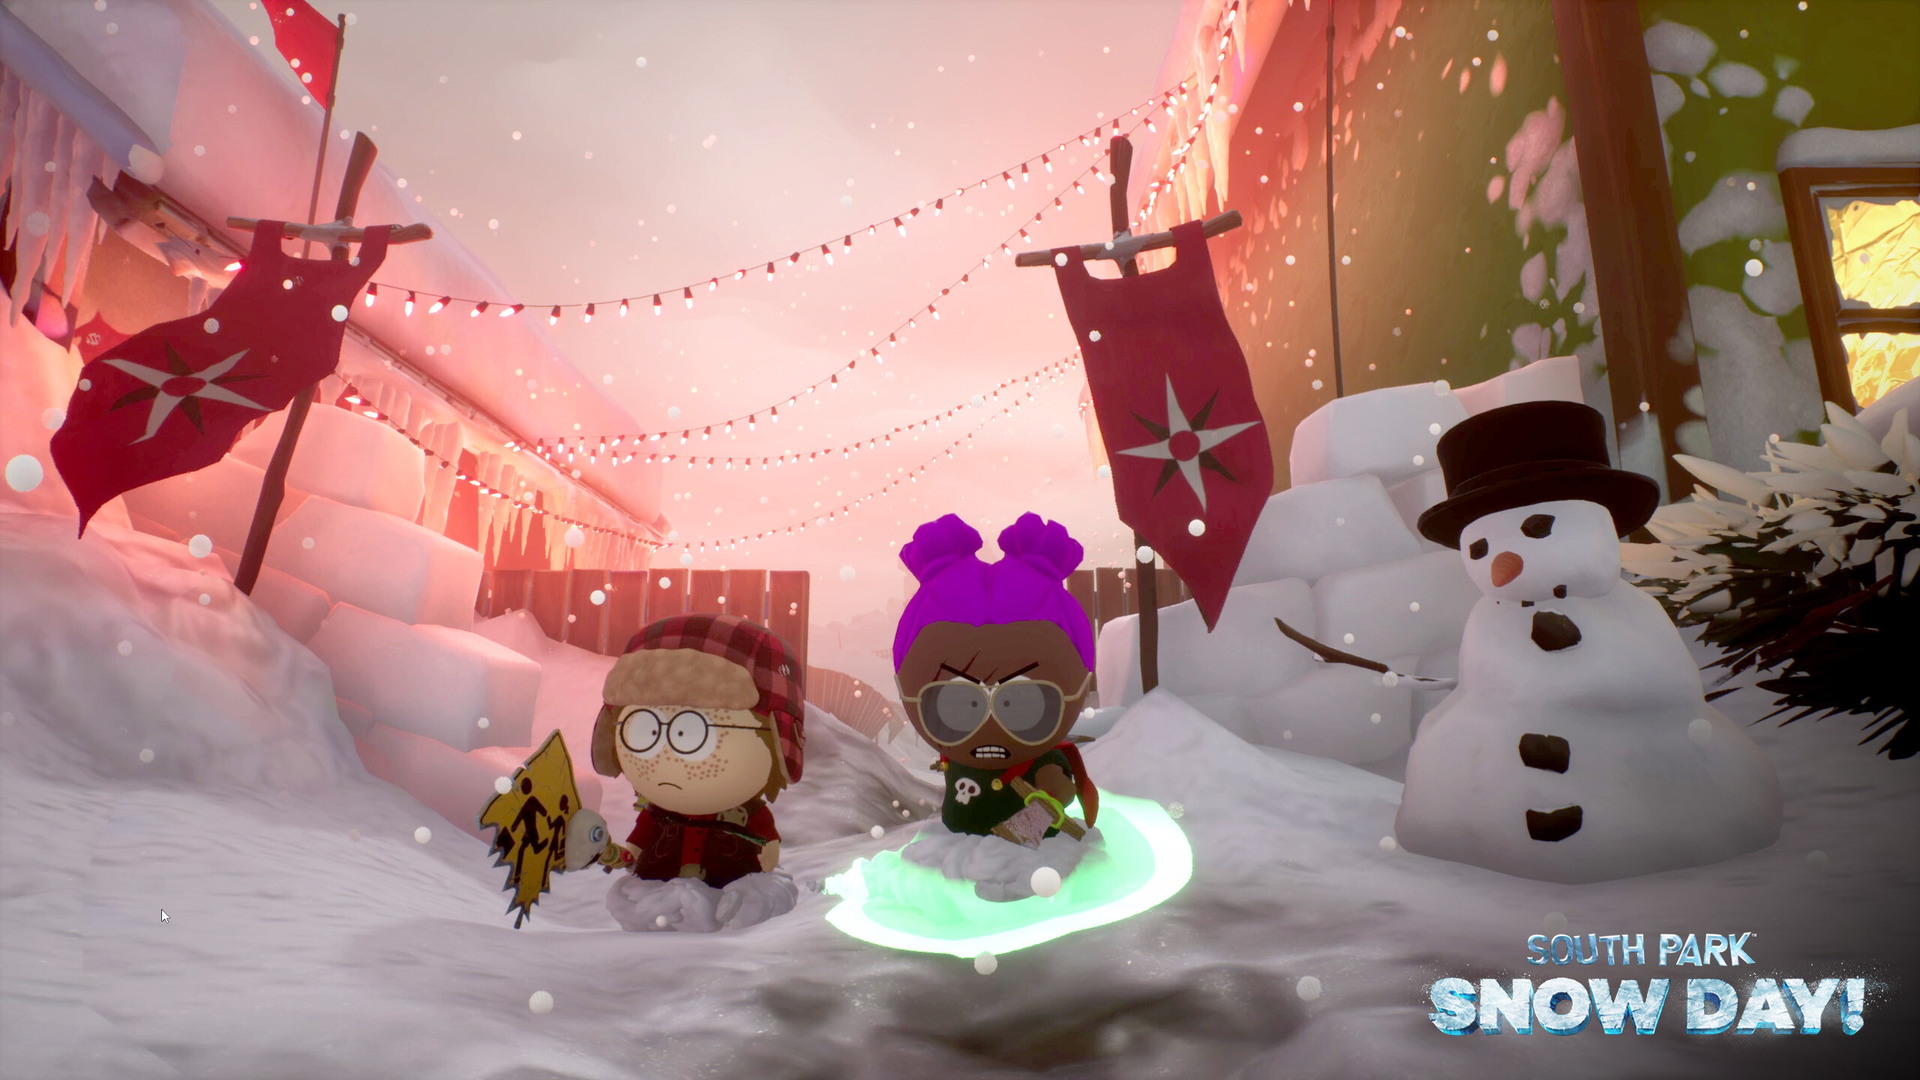 South Park: Snow Day! - screenshot 1